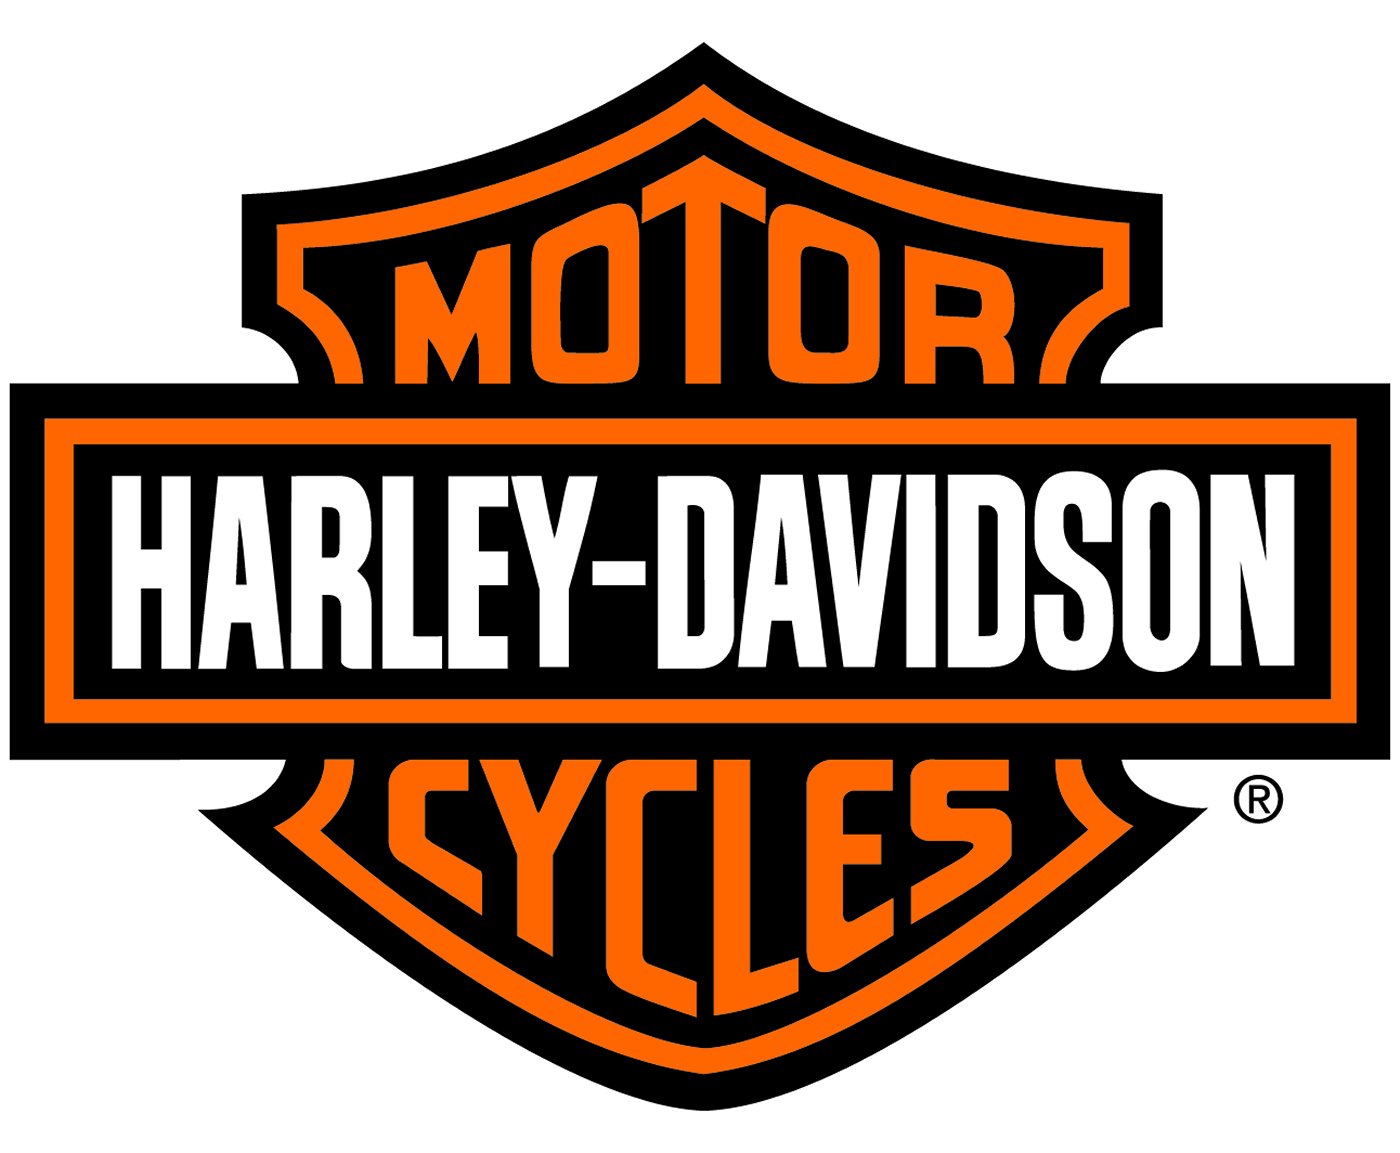 harley davidson logo